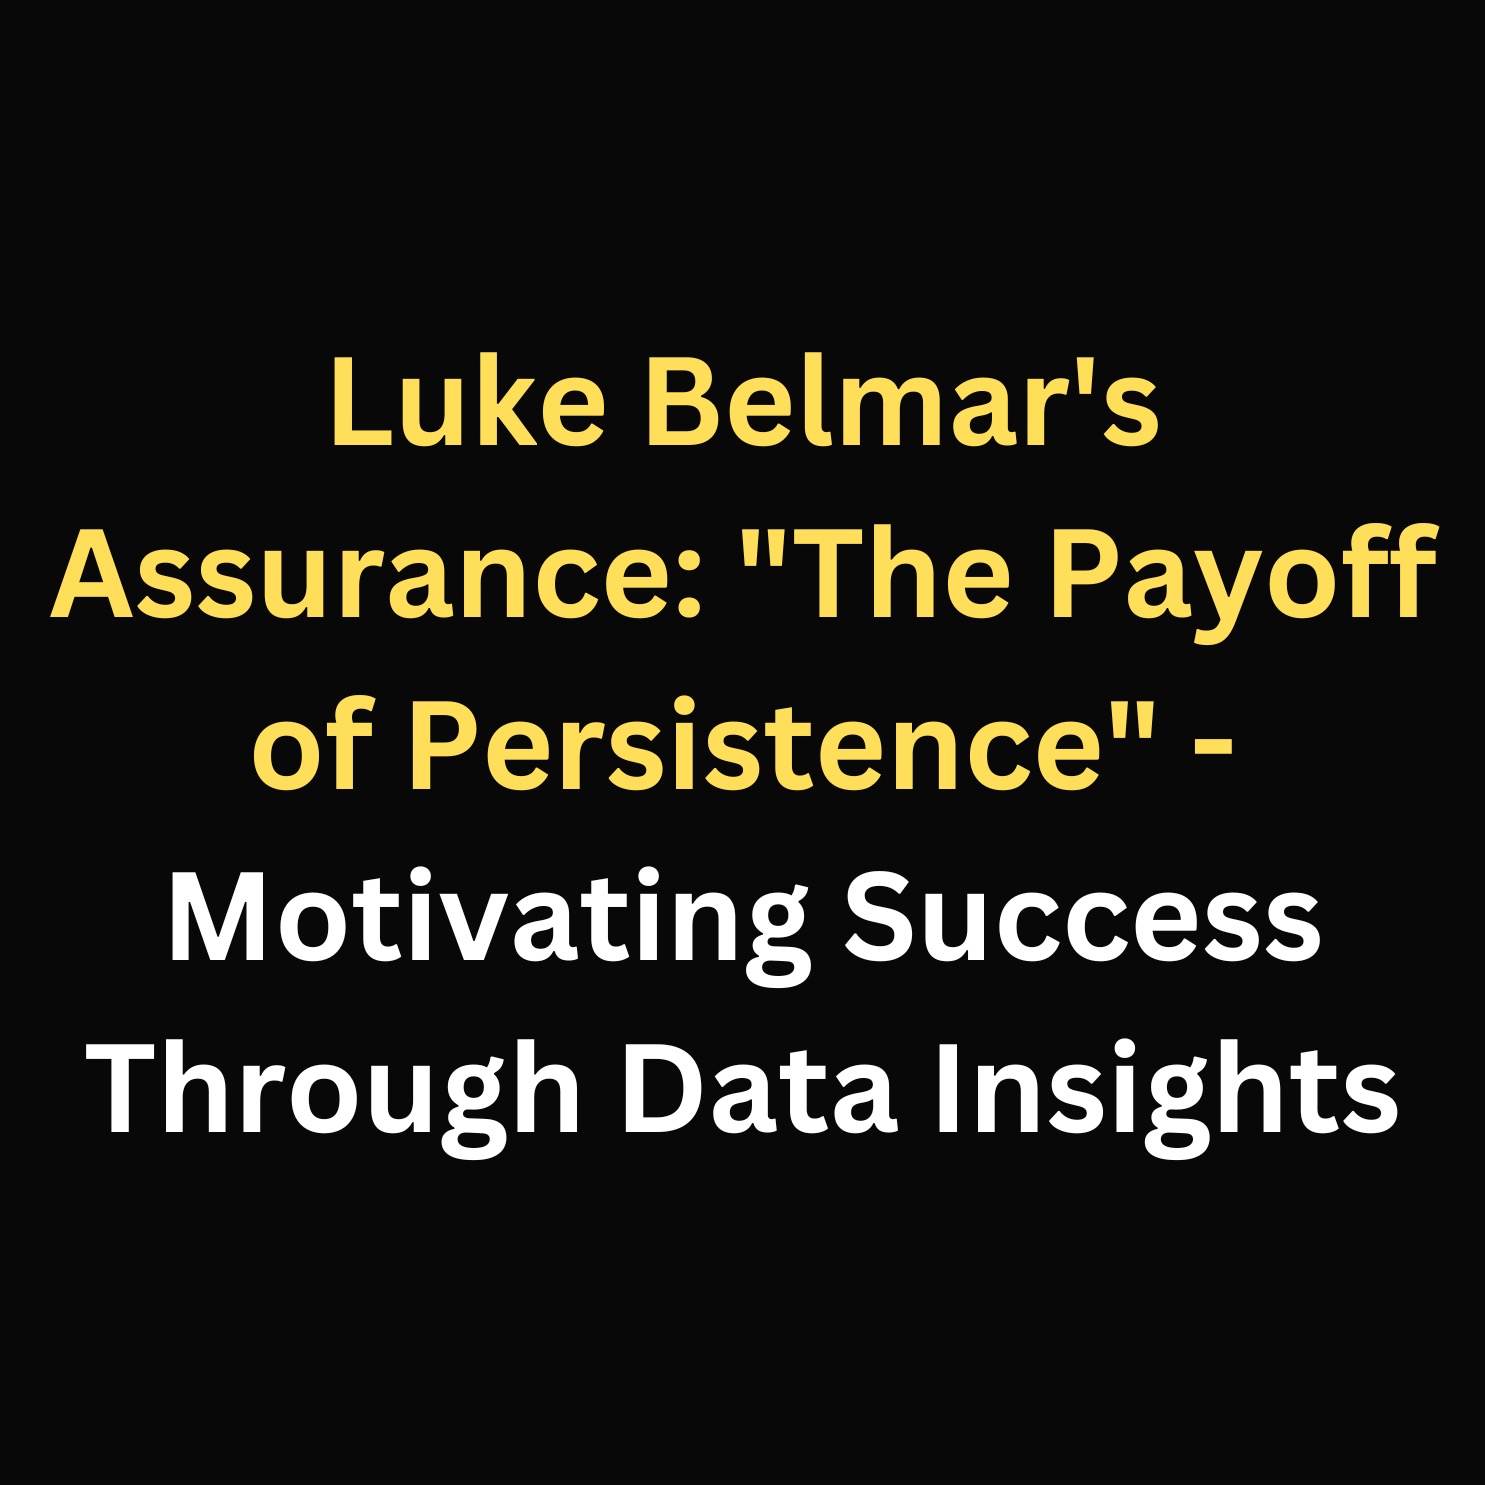 Luke Belmar's Assurance: "The Payoff of Persistence" - Motivating Success Through Data Insights